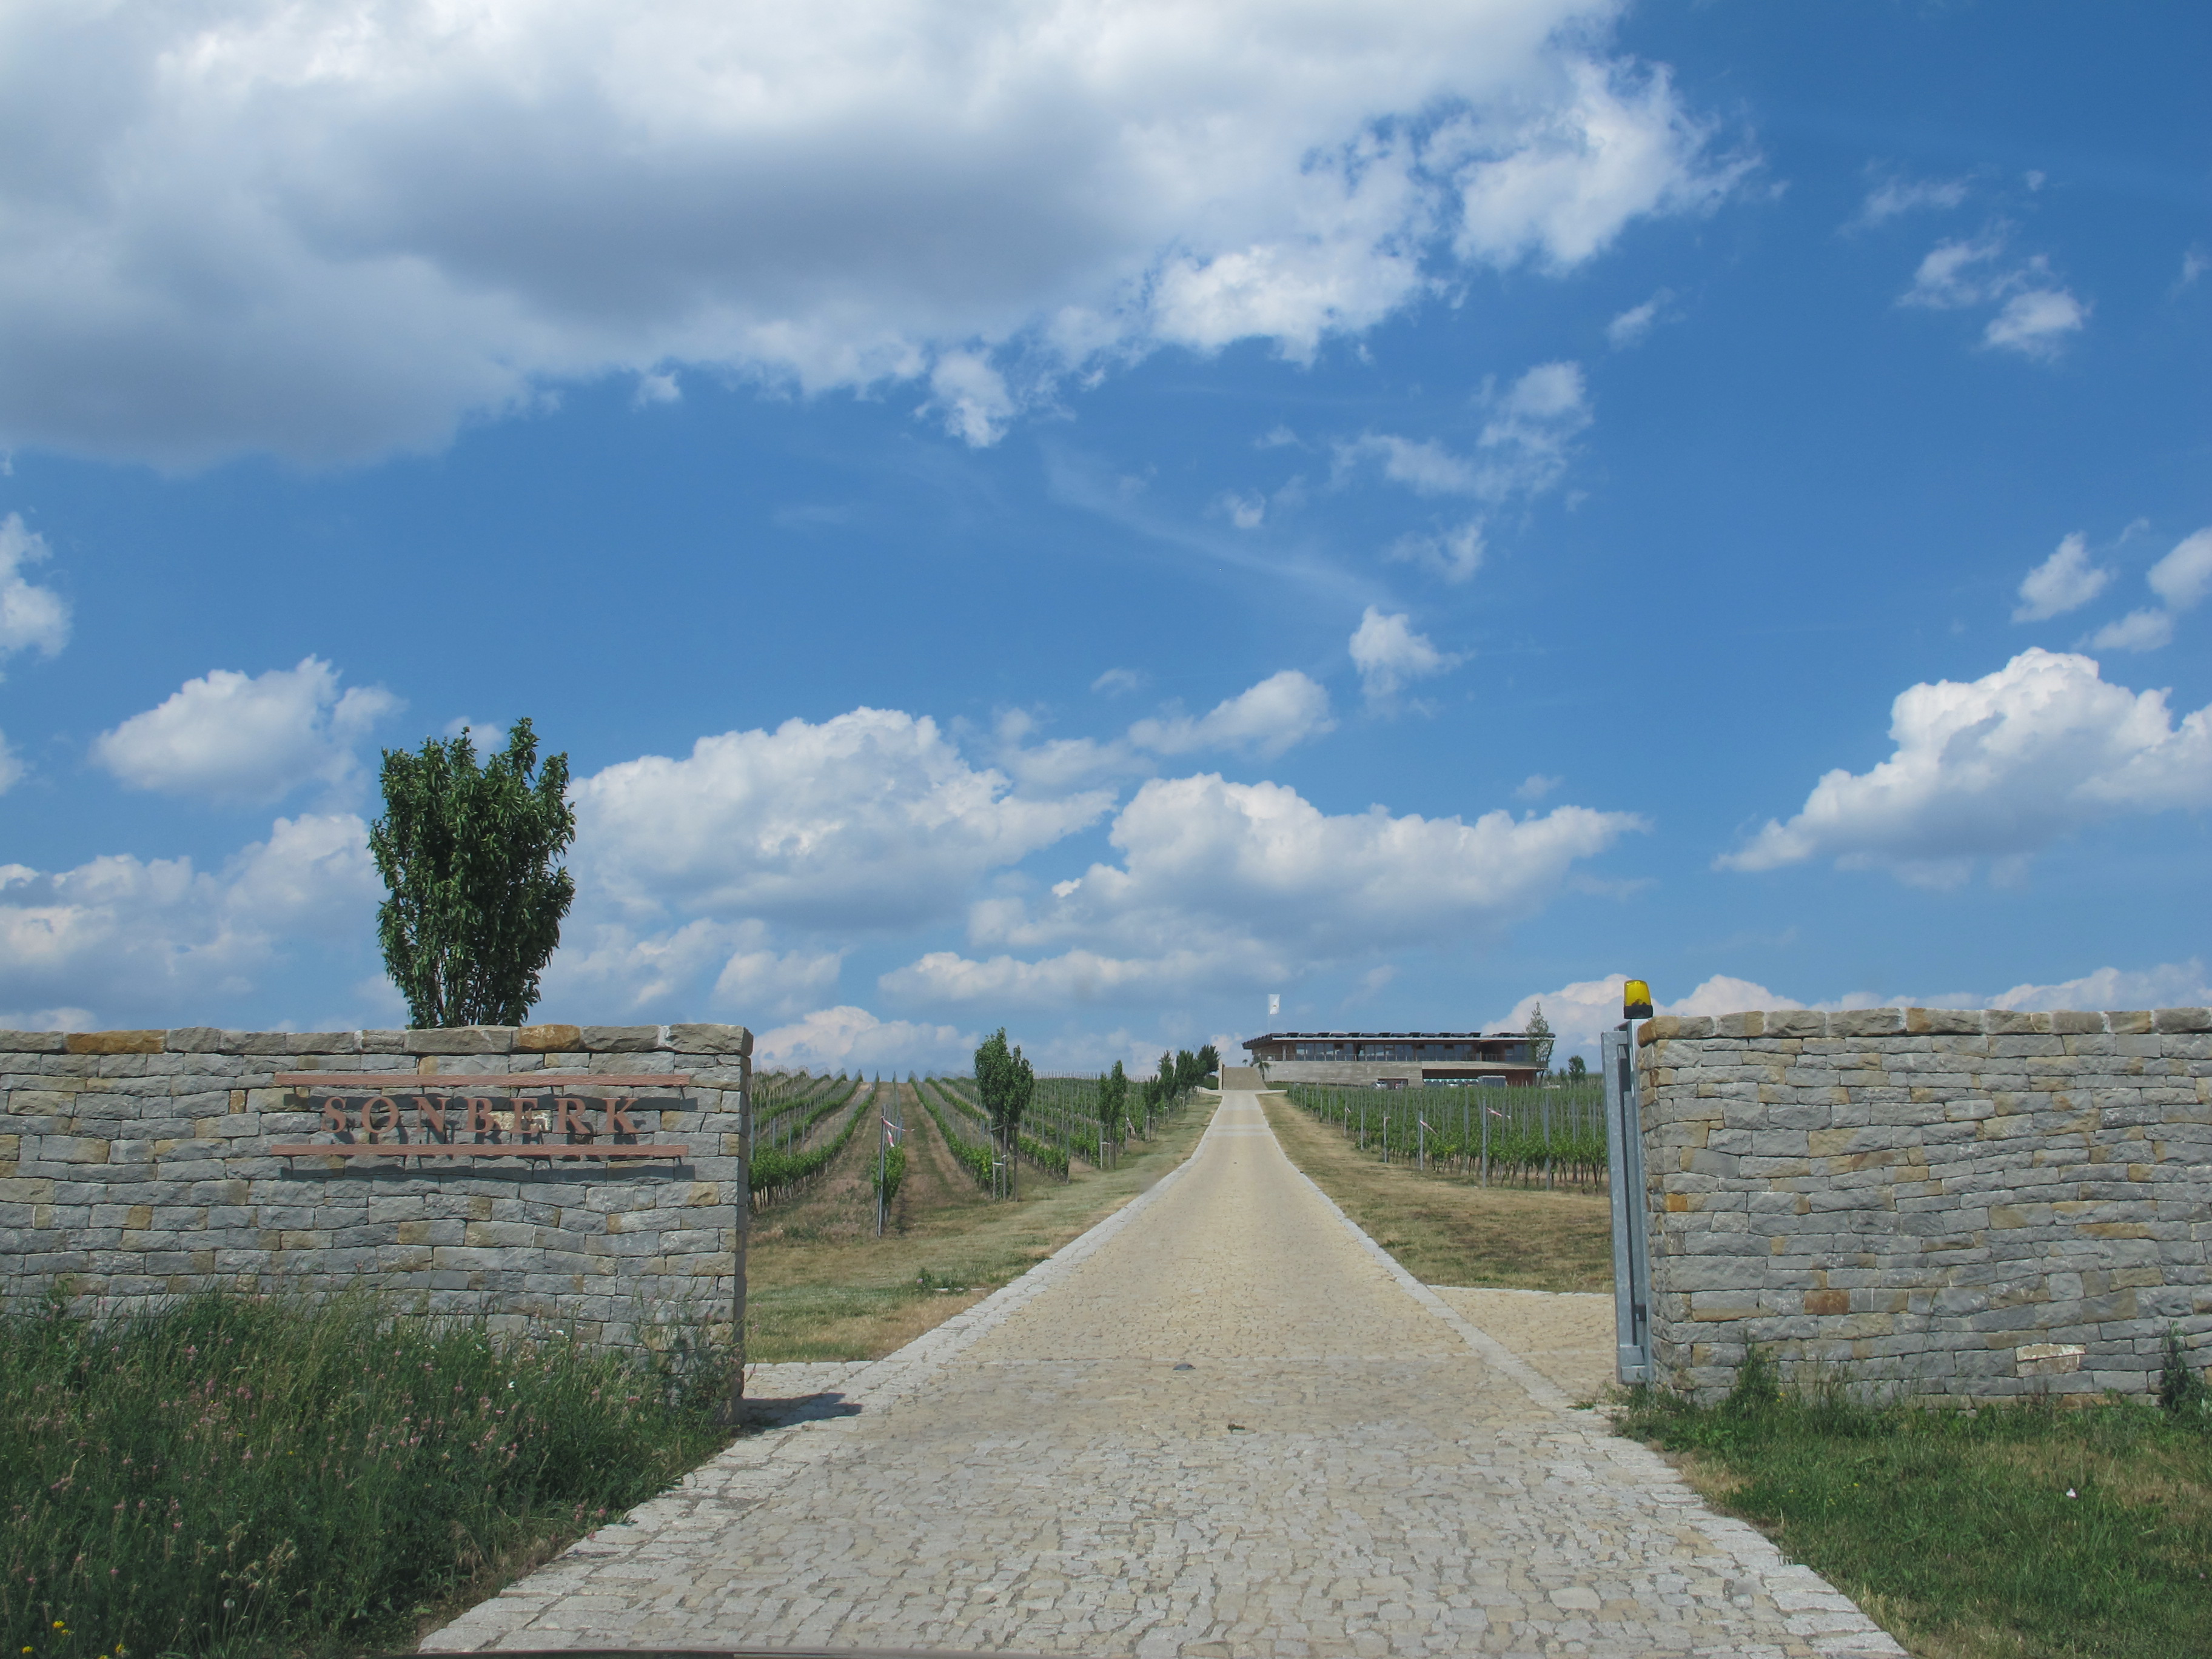 Entrance to the Sonberk winery